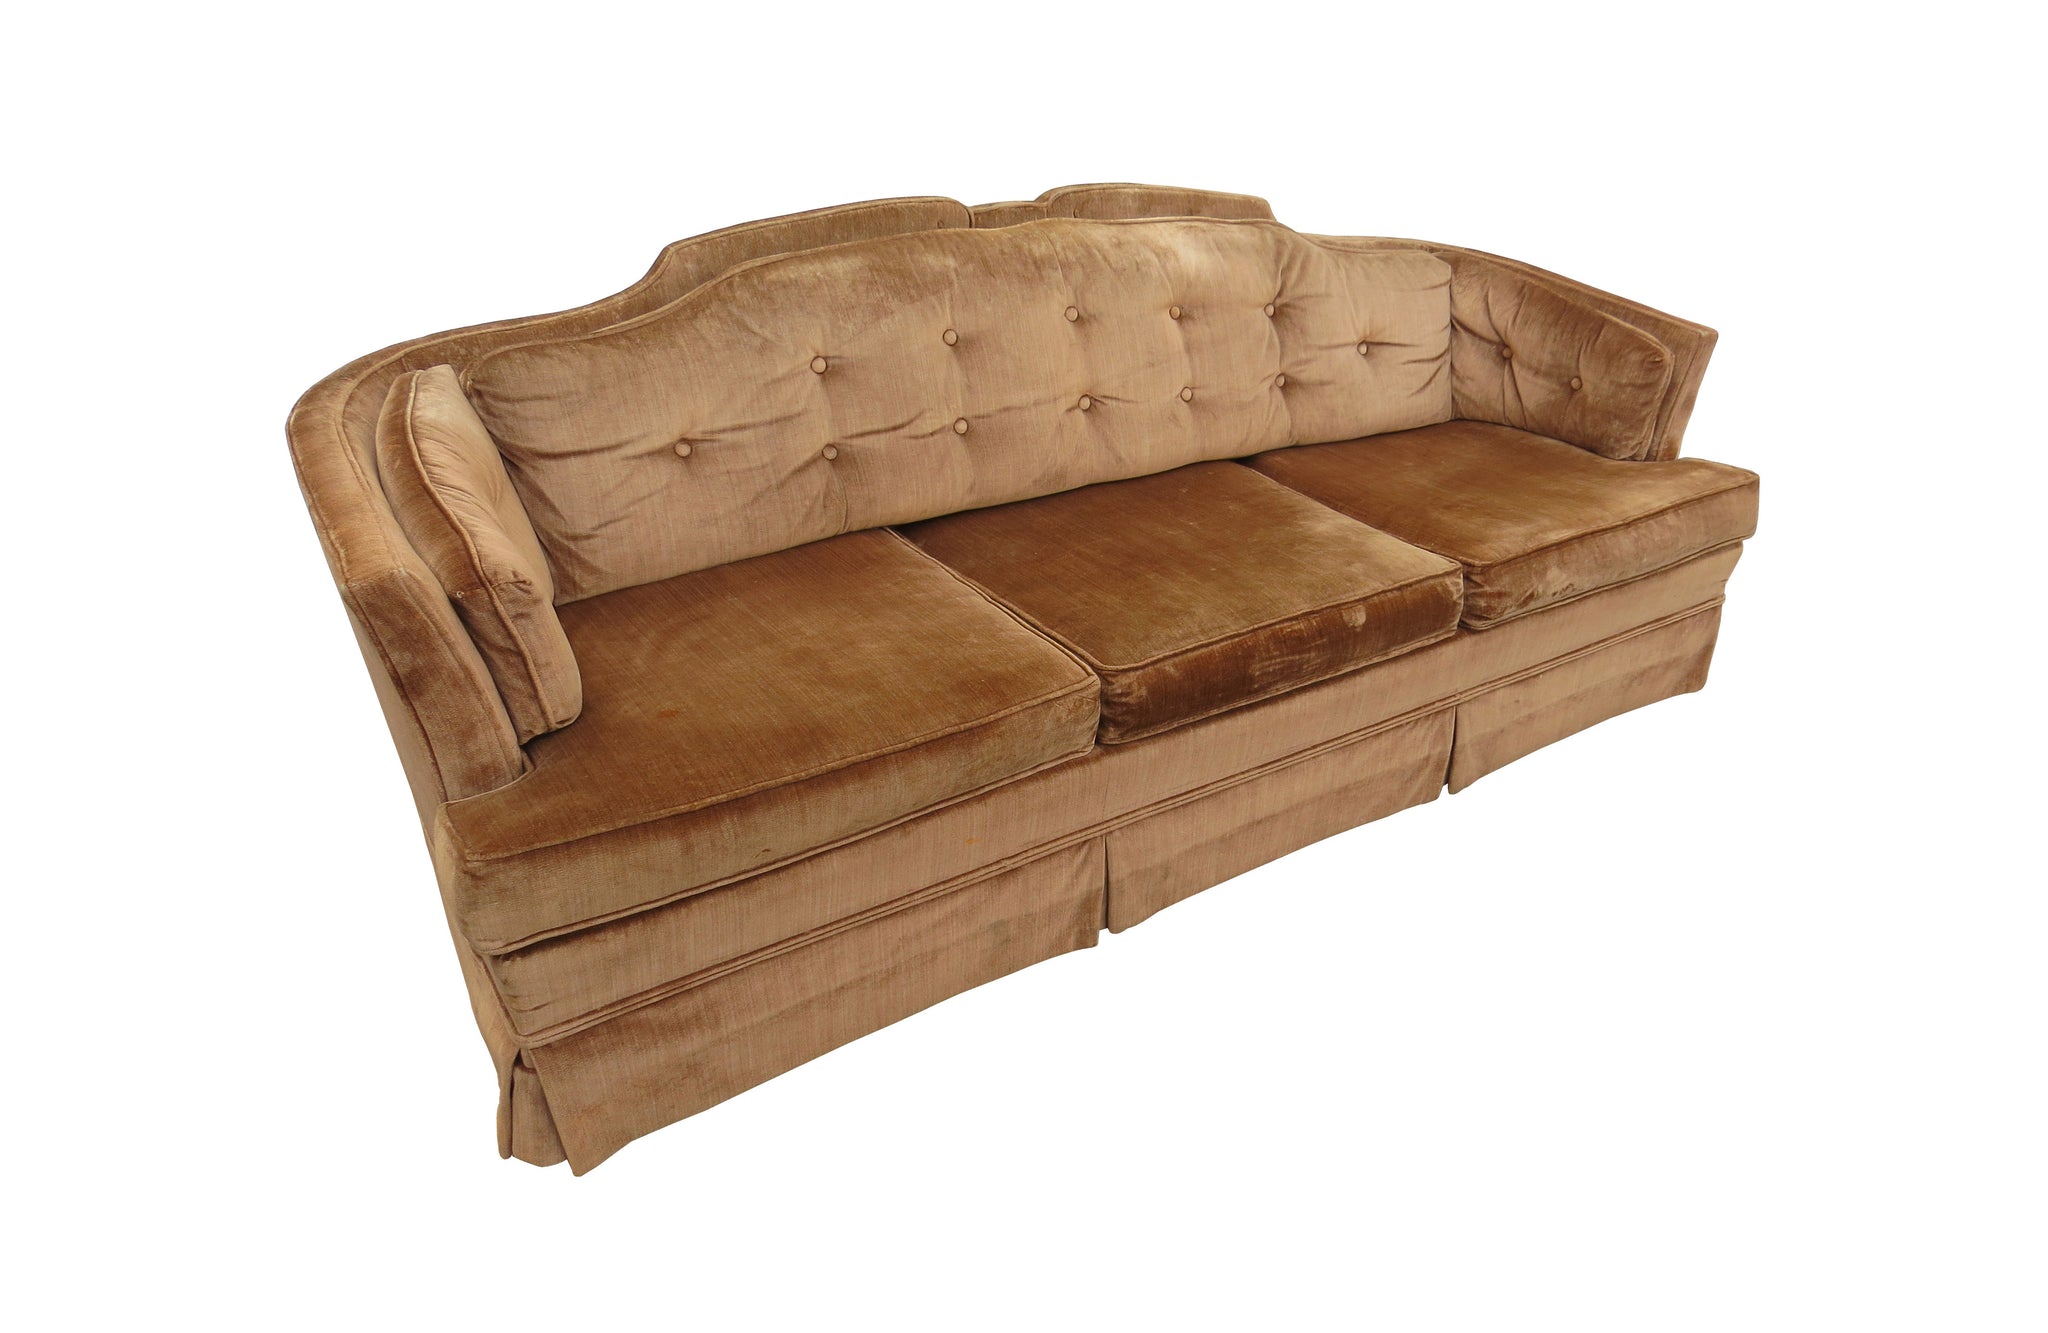 edgebrookhouse - 1930s art deco tufted bronze velvet sofa by prince howard furniture company